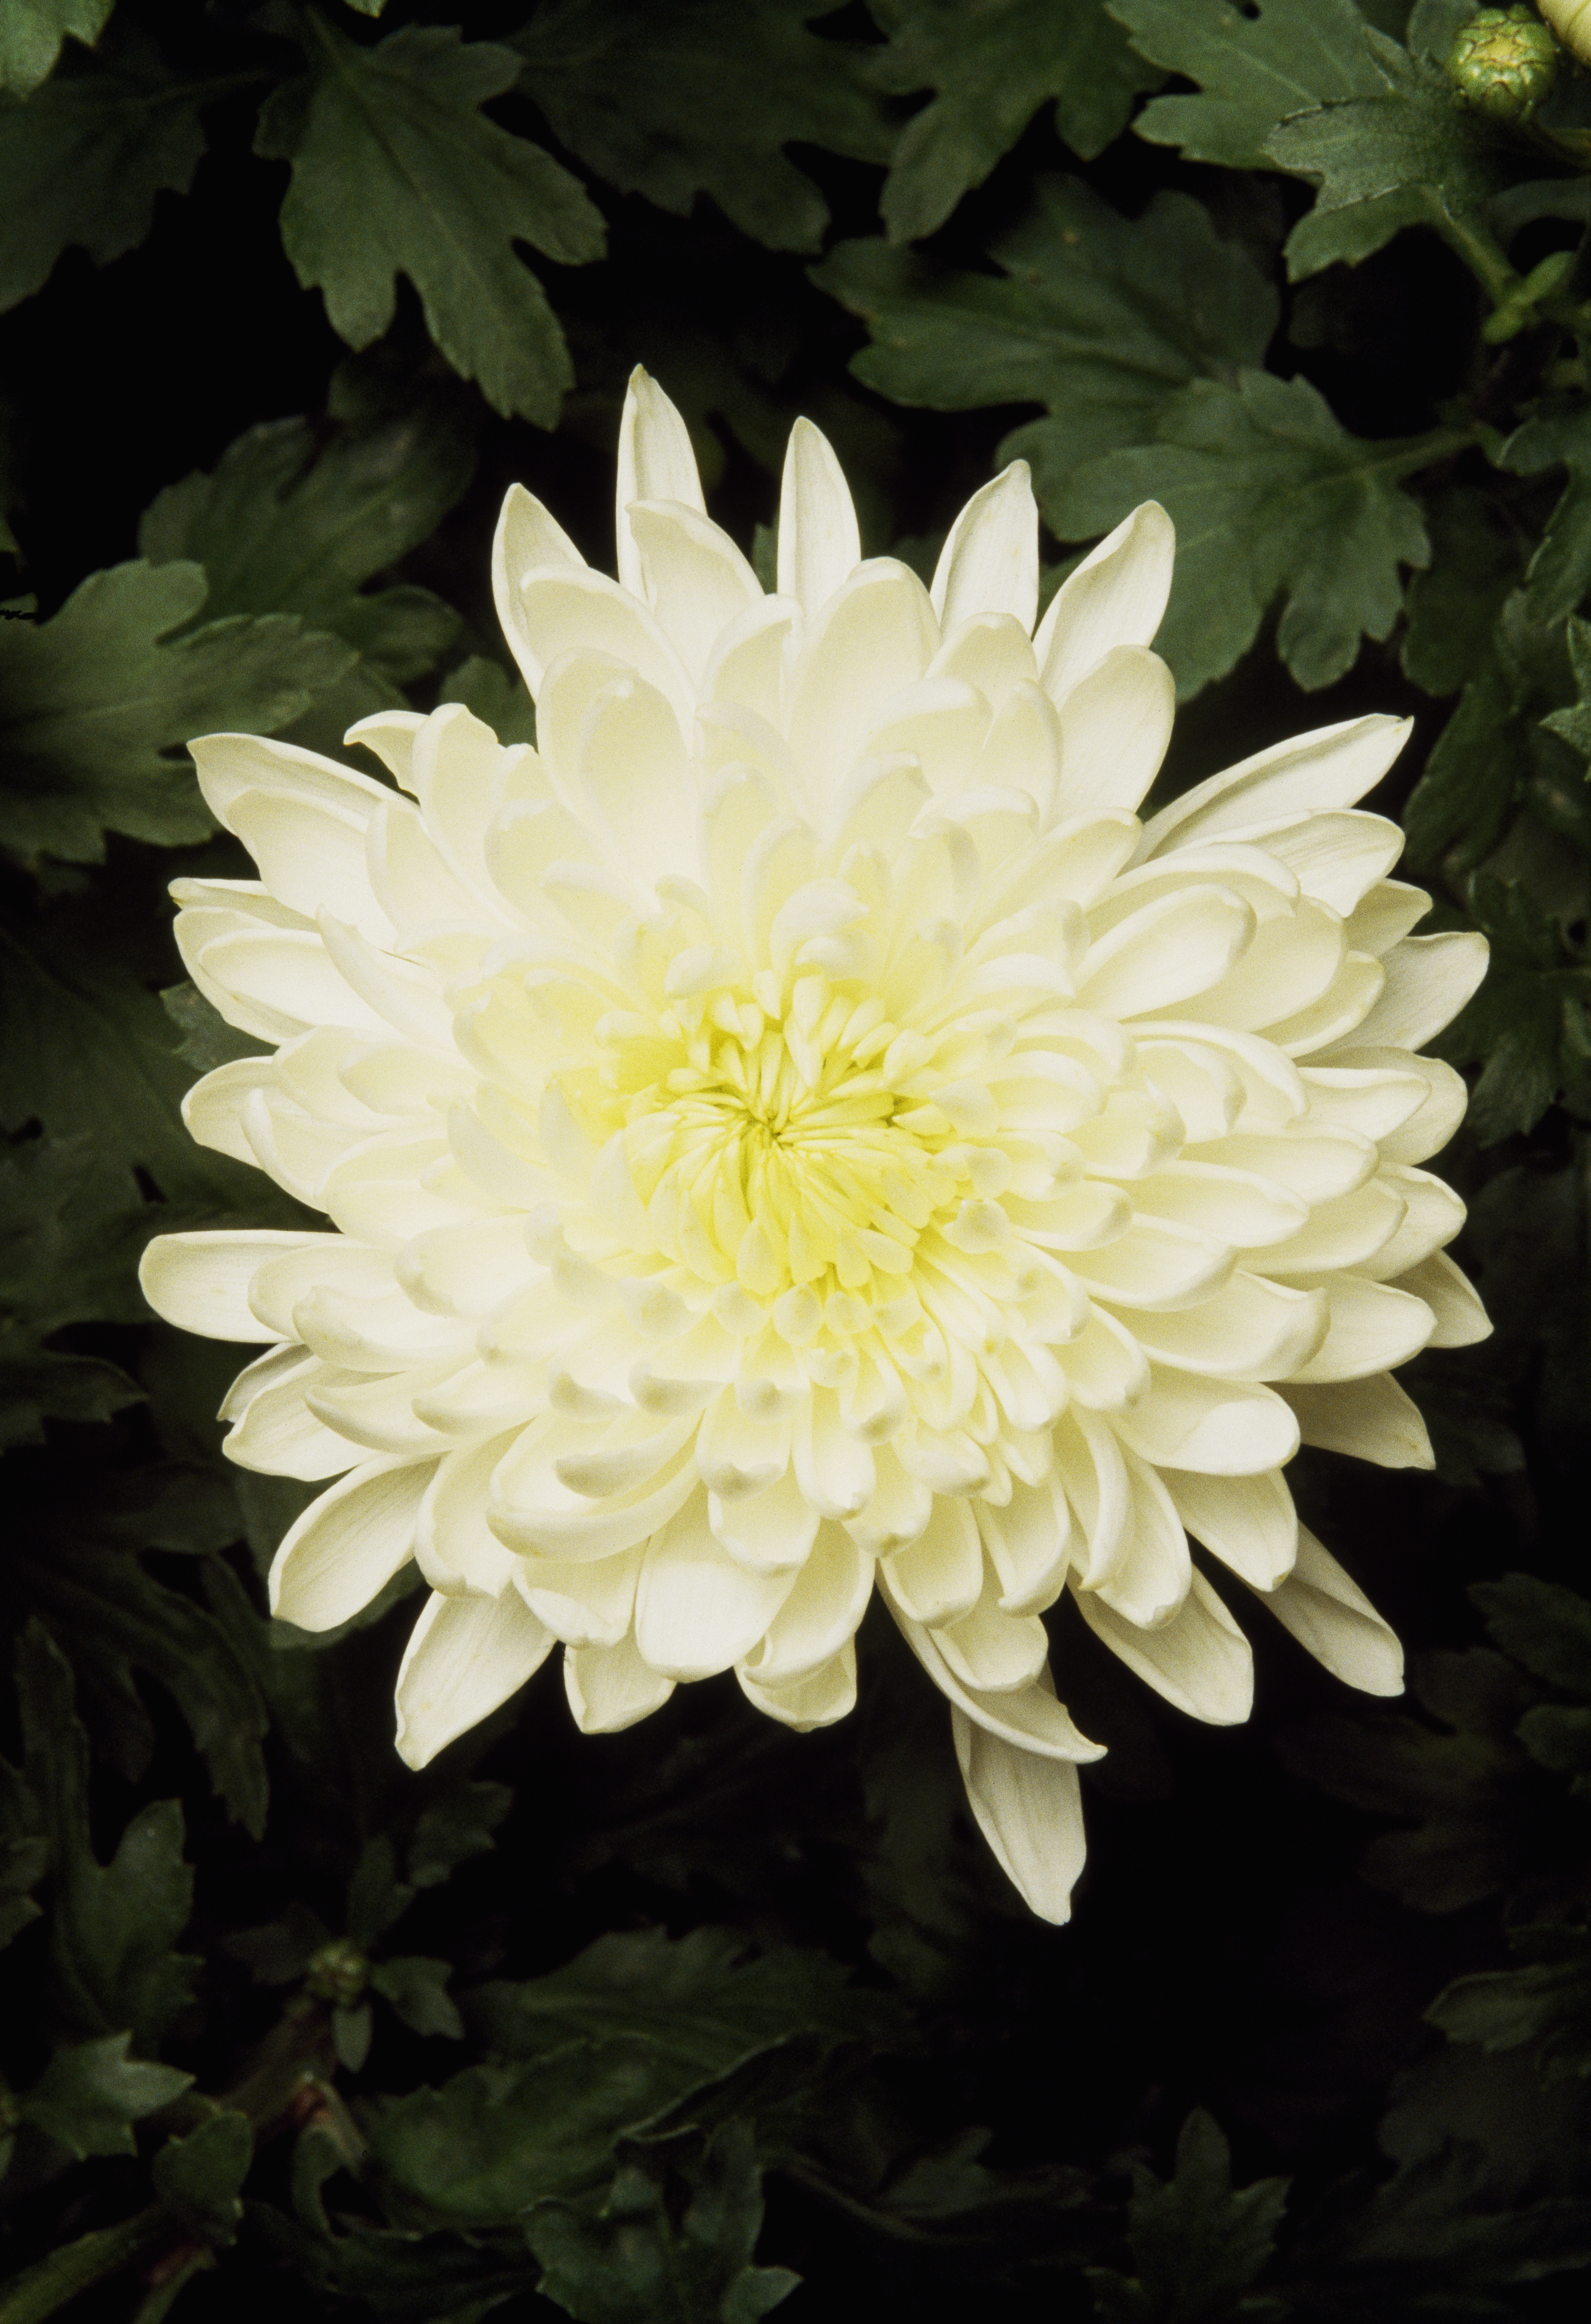 florist's chrysanthemum